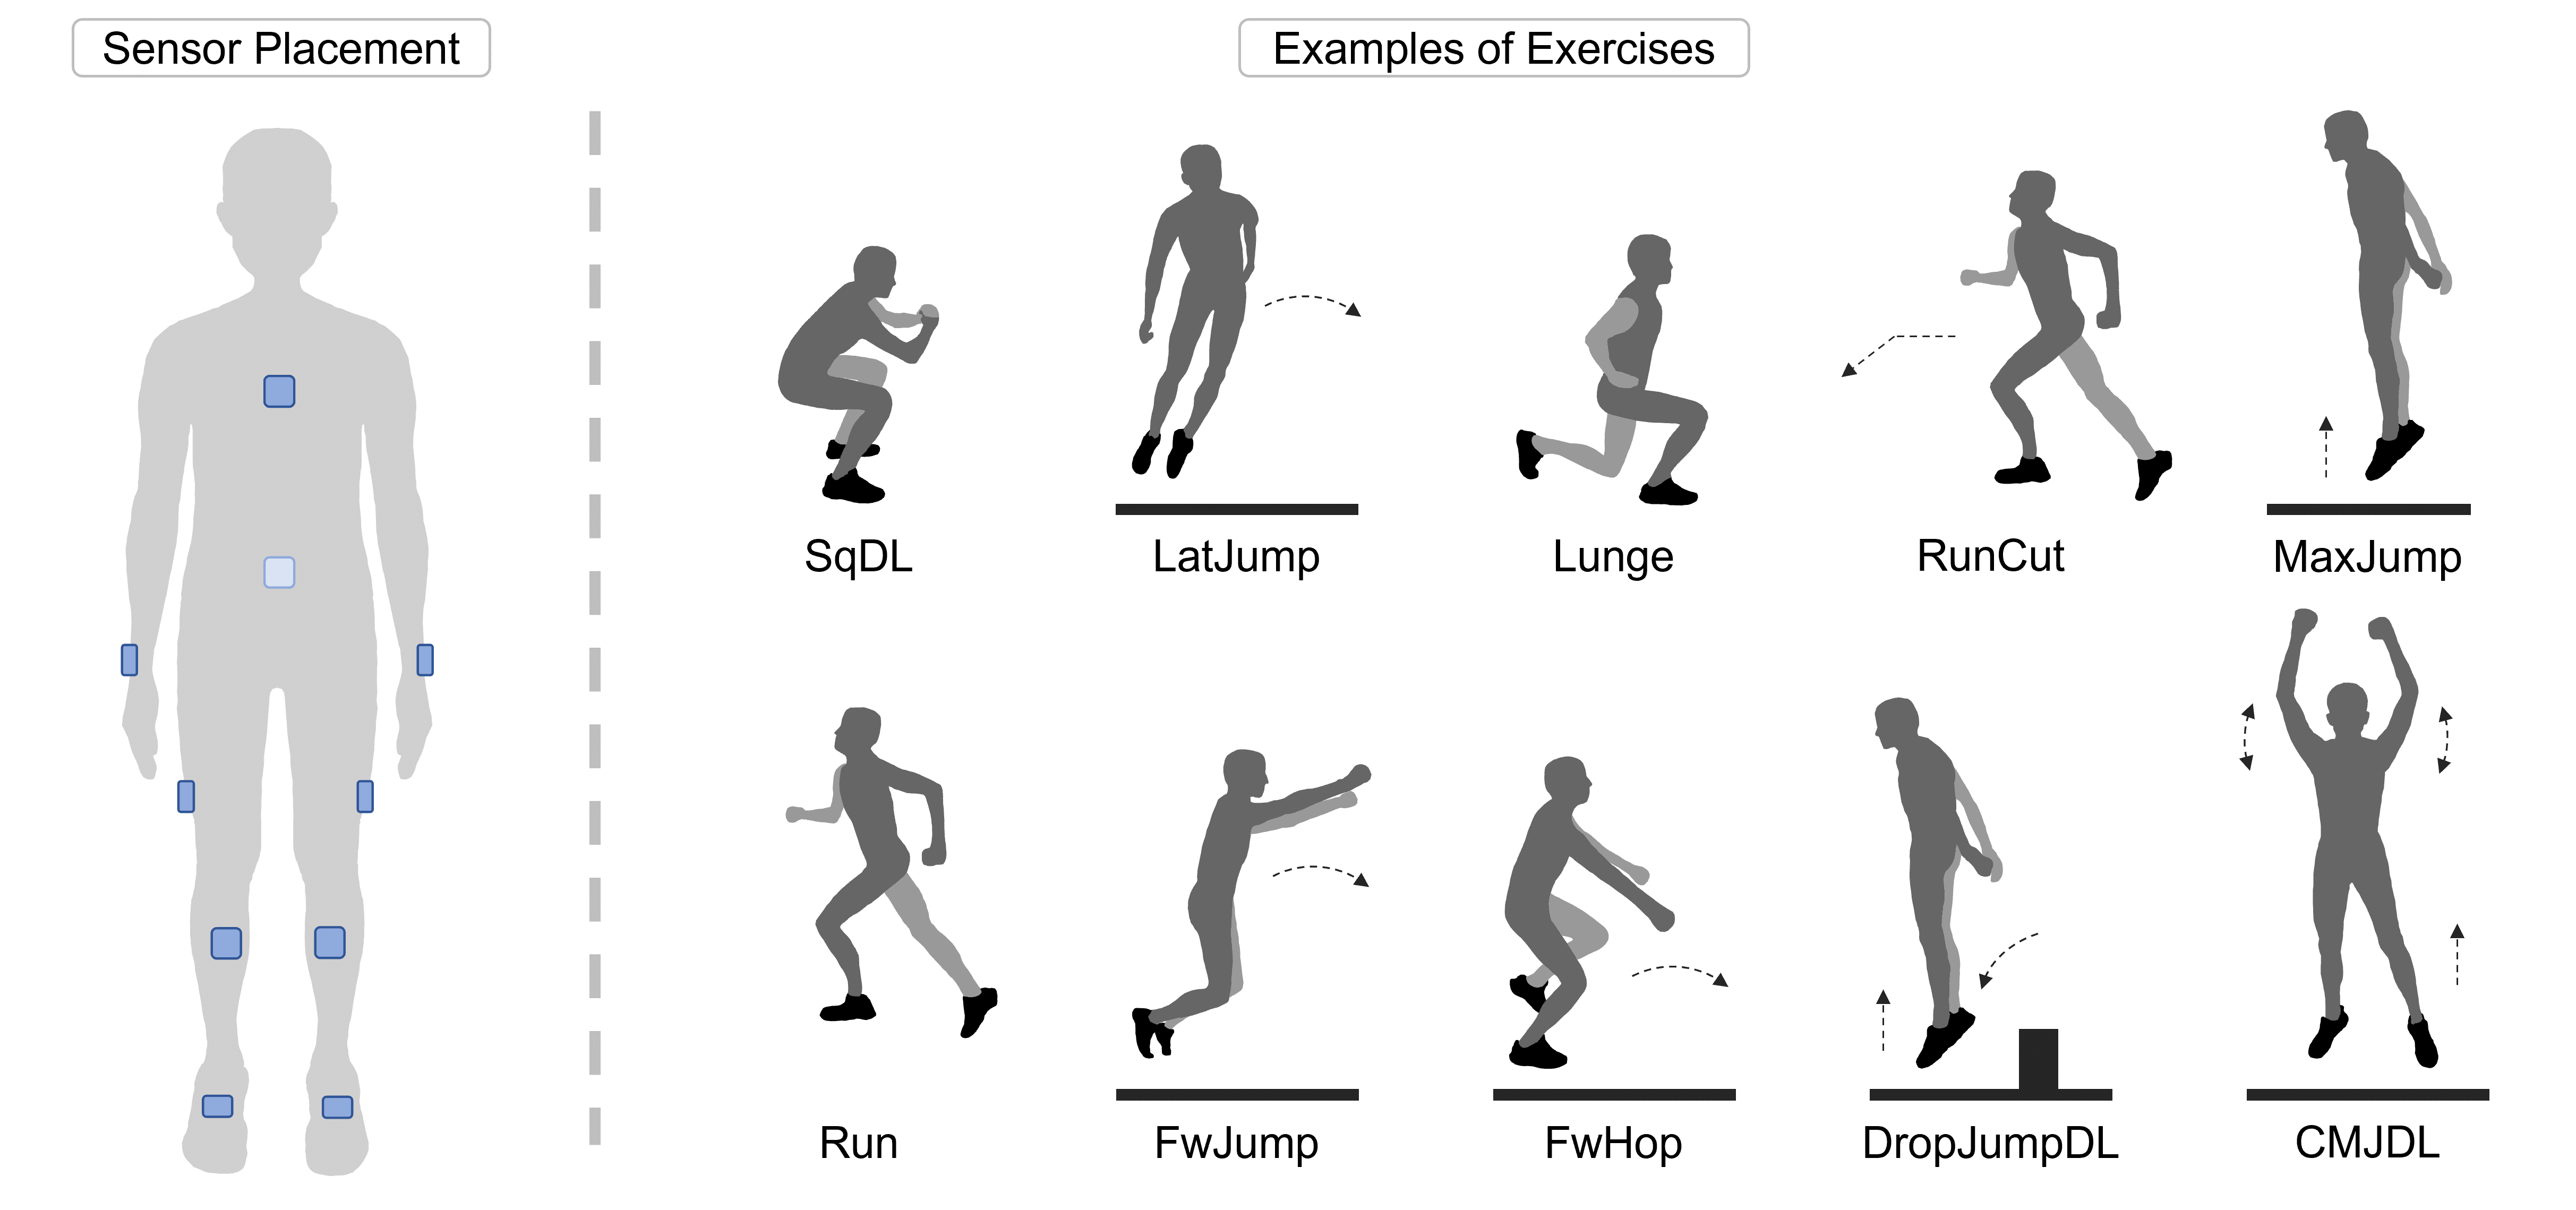 figure [exercise]: Algorithm Overview